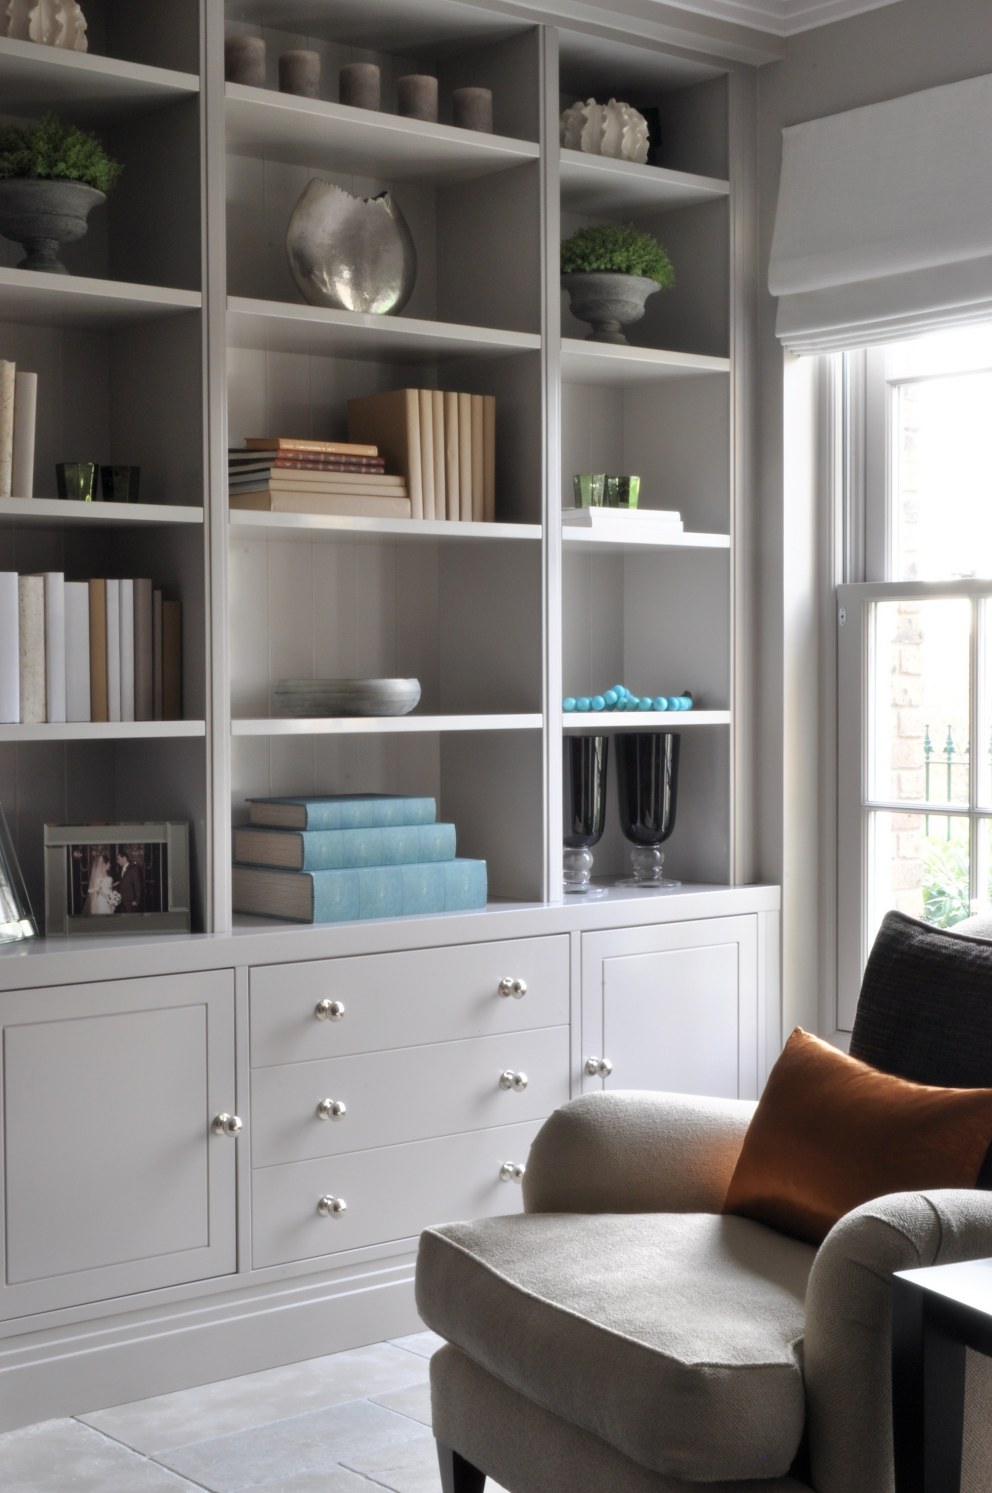 Prestigious development in Hertfordshire | Living Room | Interior Designers